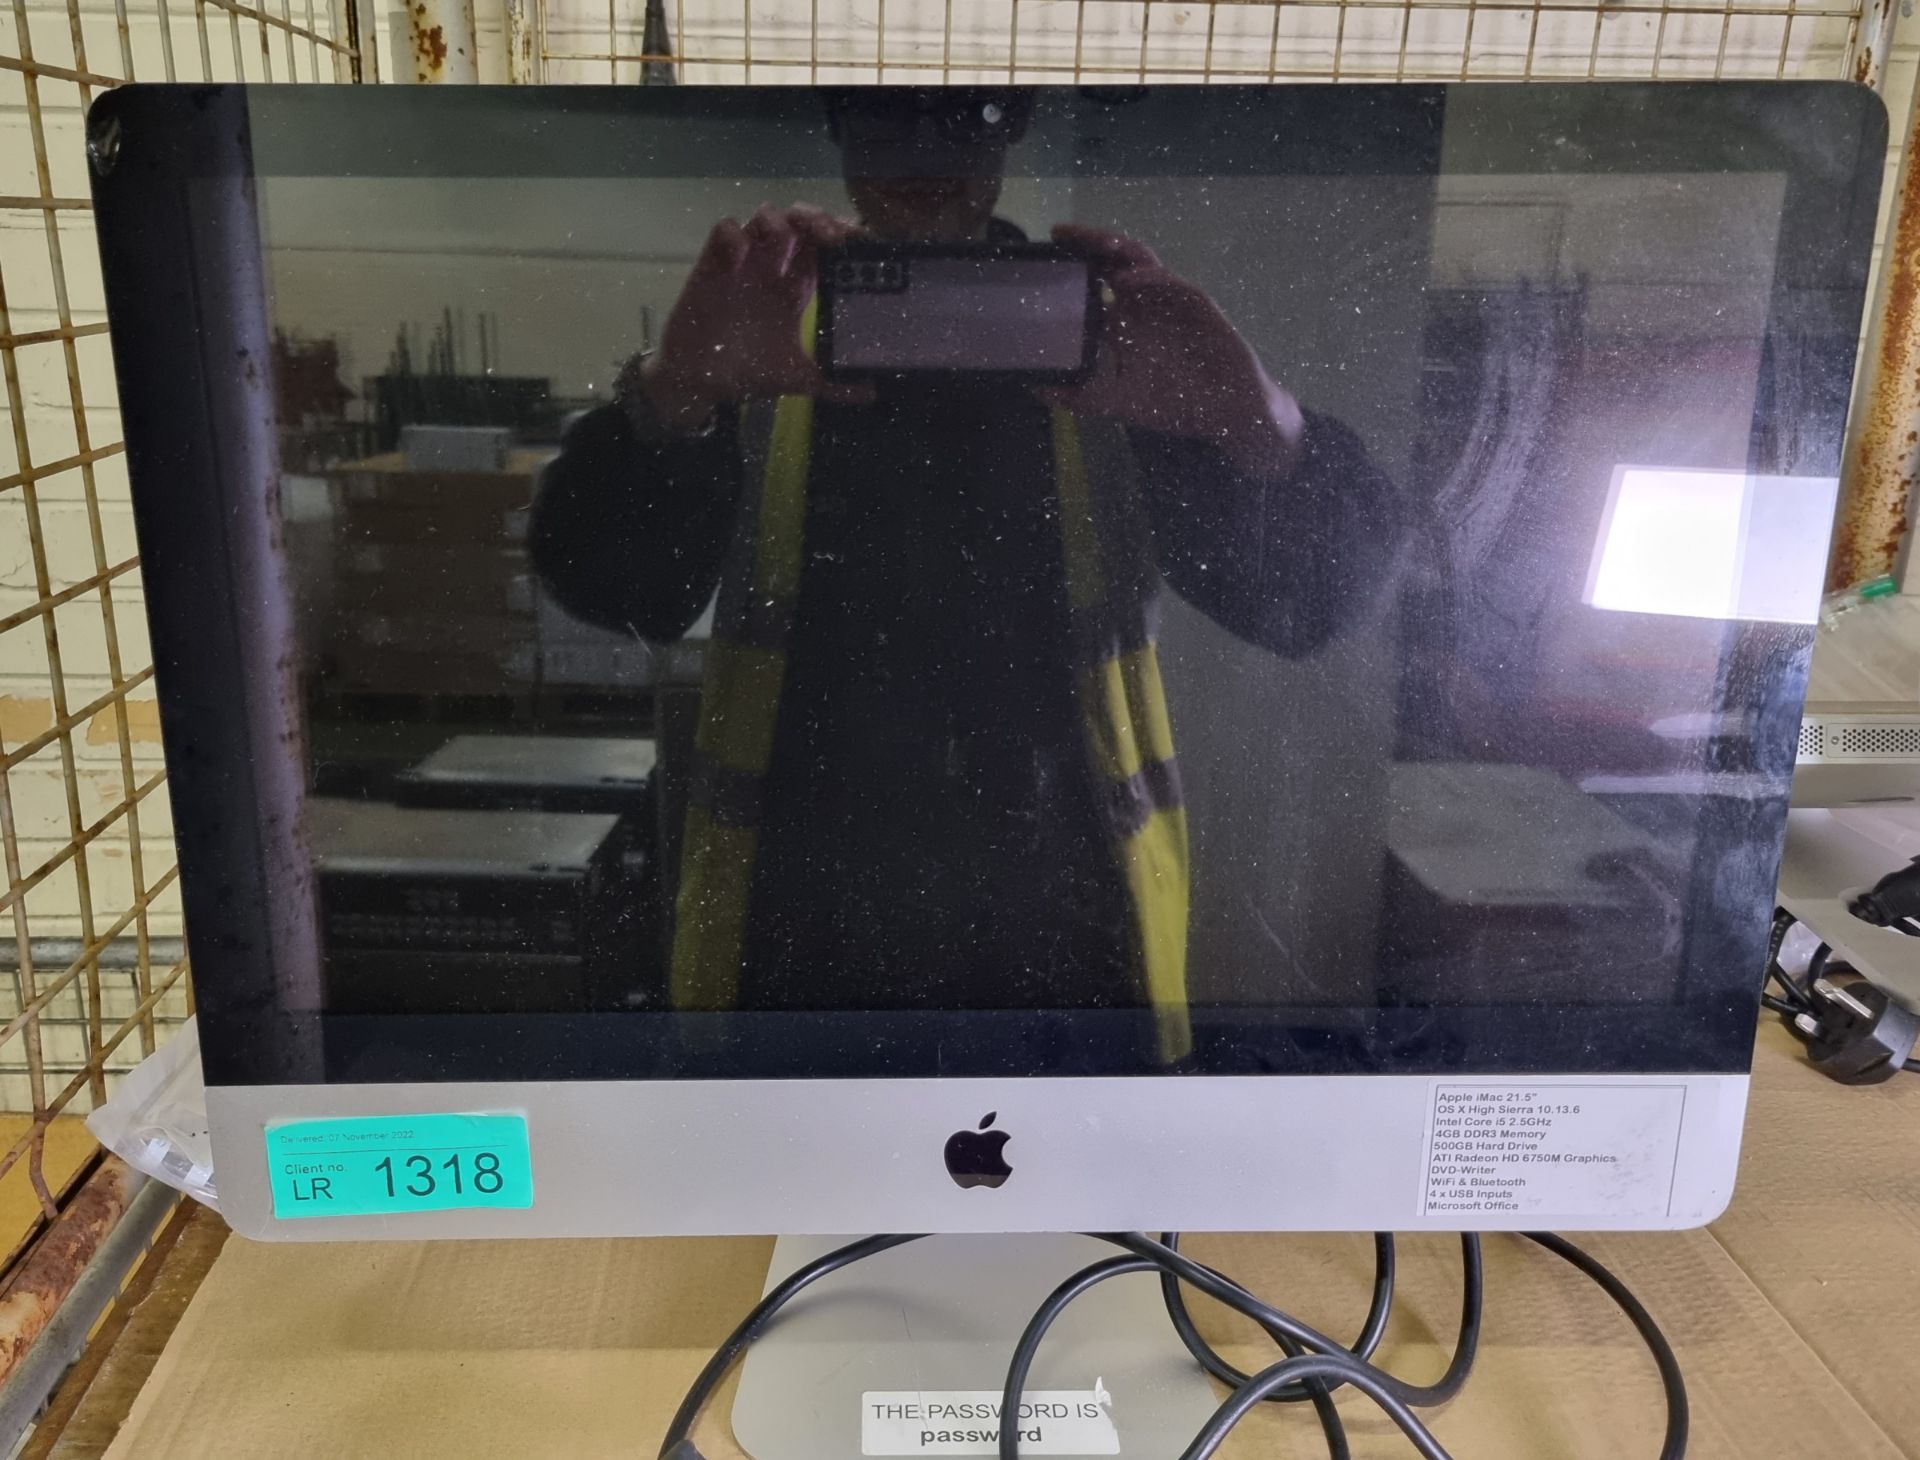 Apple iMac 21.5” OS X High Sierra Intel Core i5 Quad Core 4GB Memory 500GB HD, WiFi, Bluetooth - Image 2 of 4